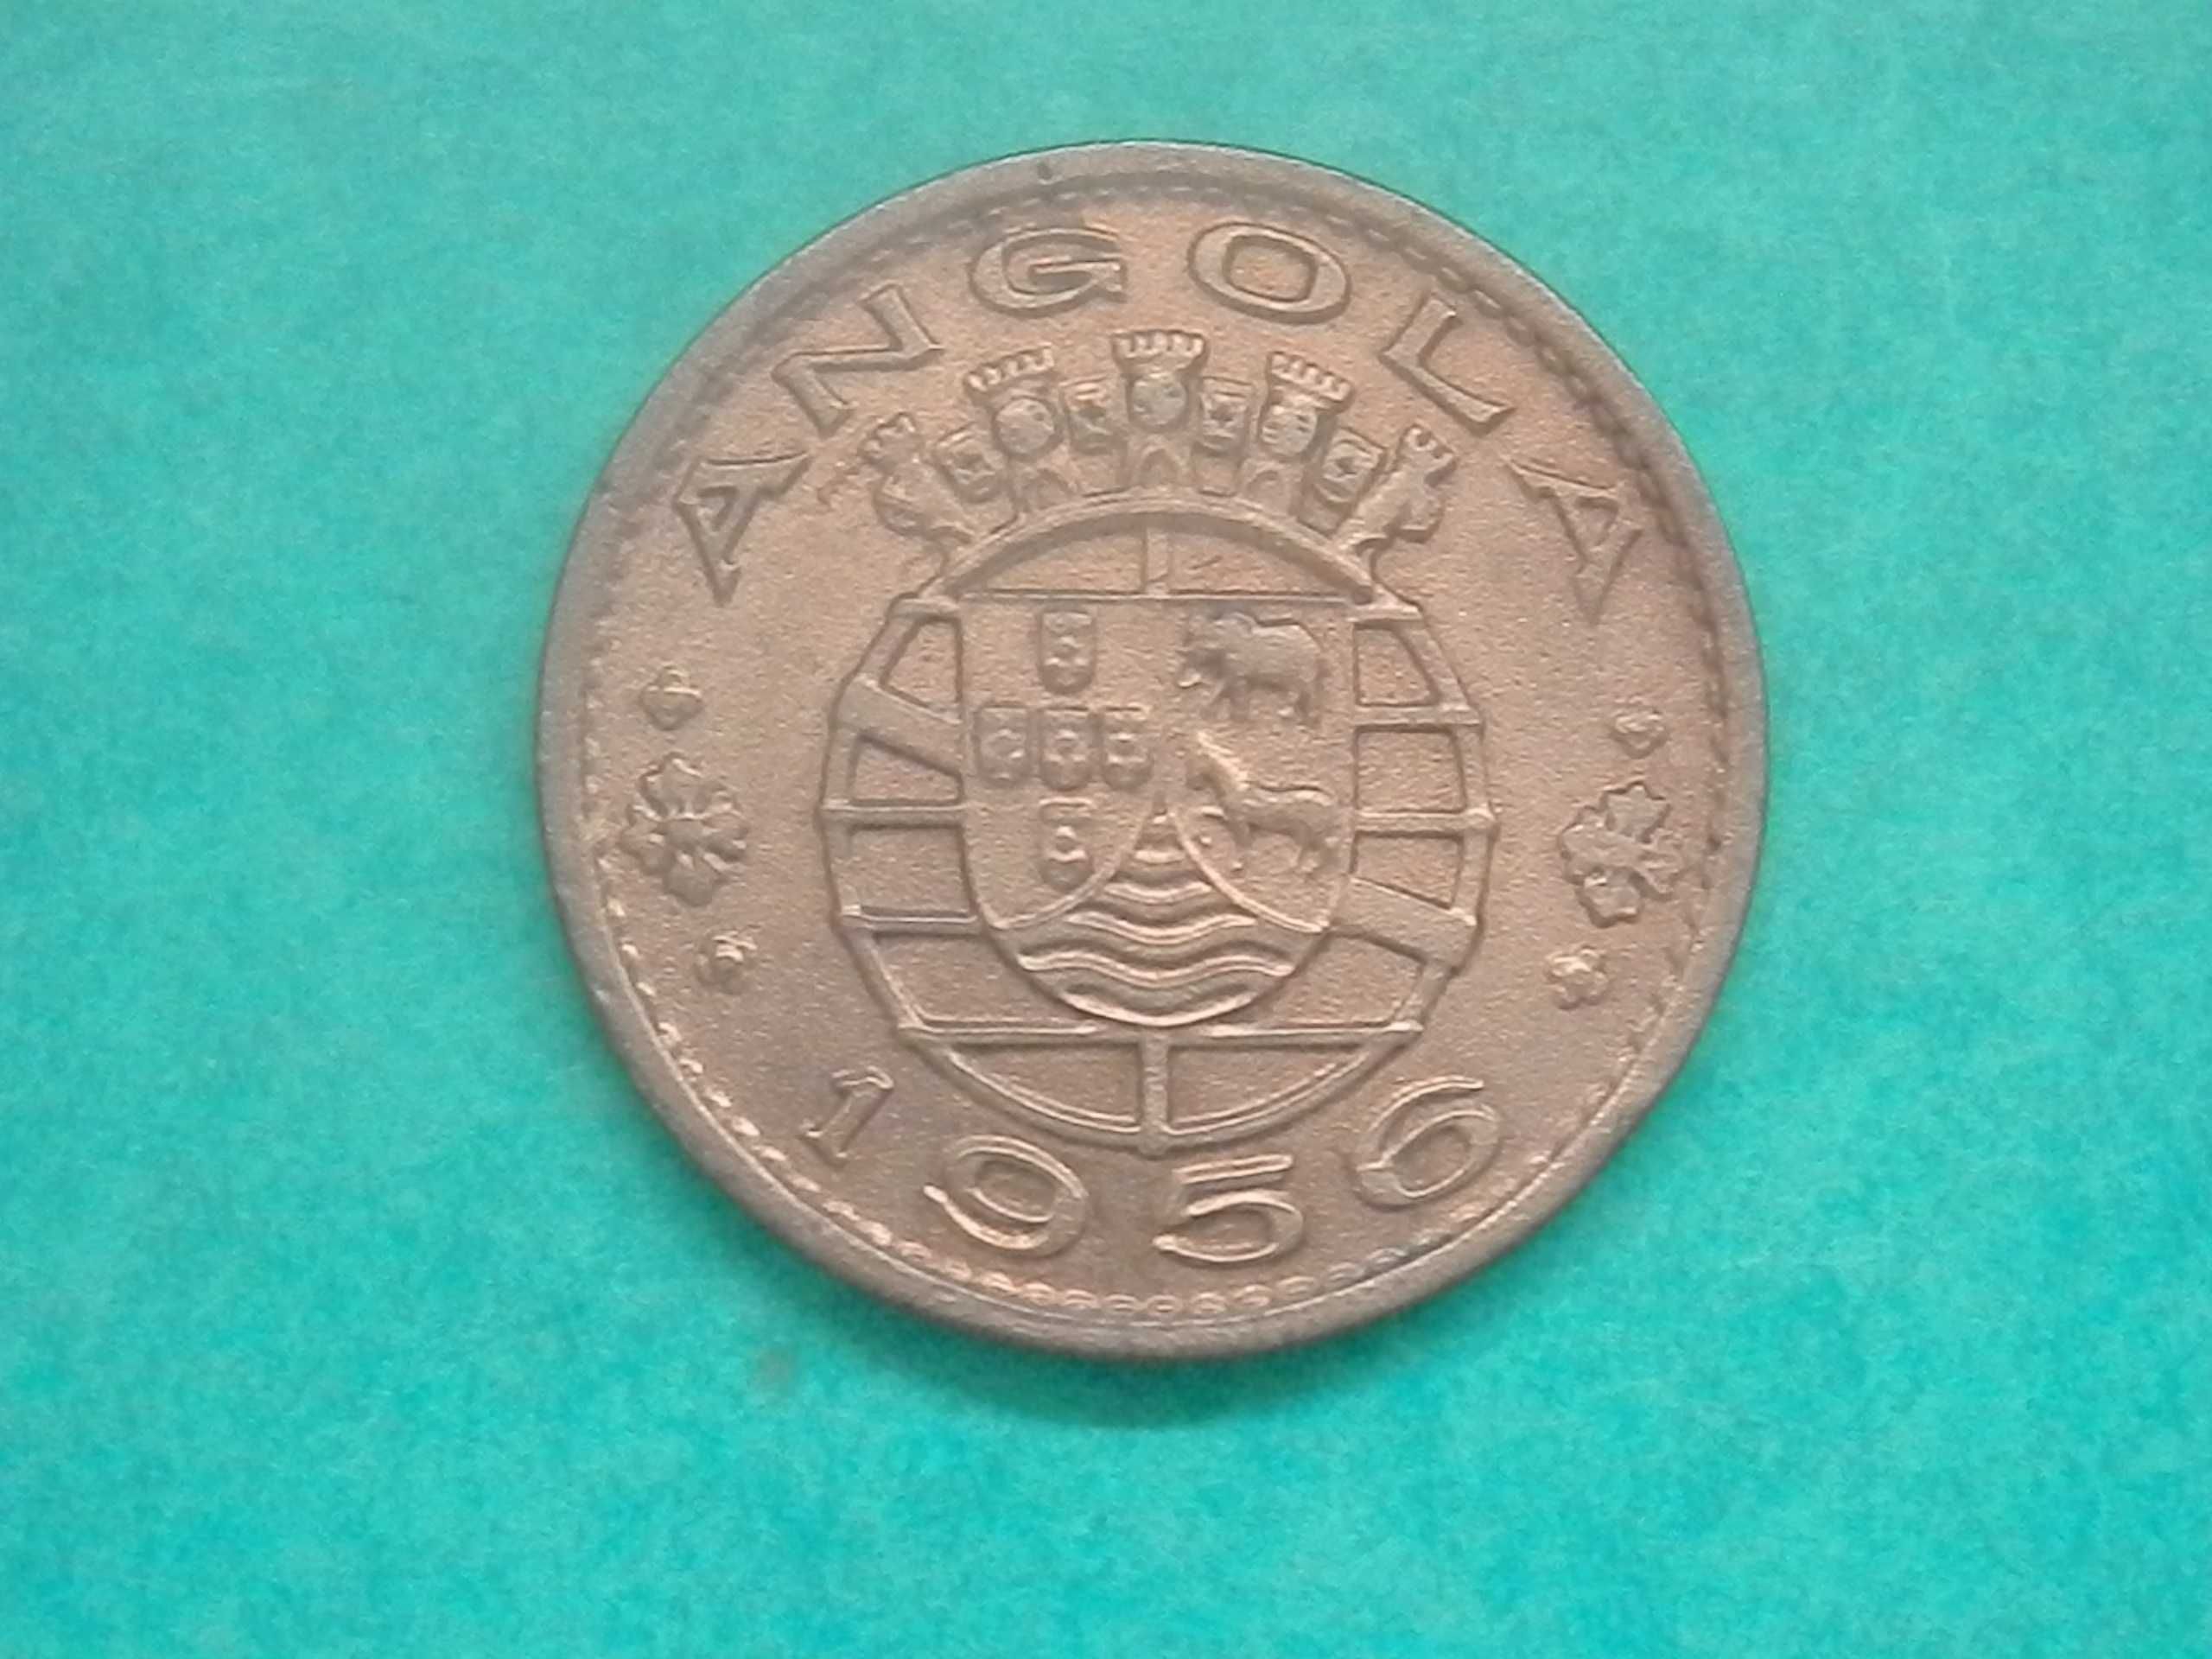 618 - Angola: 1 escudo 1956 bronze, por 5,00